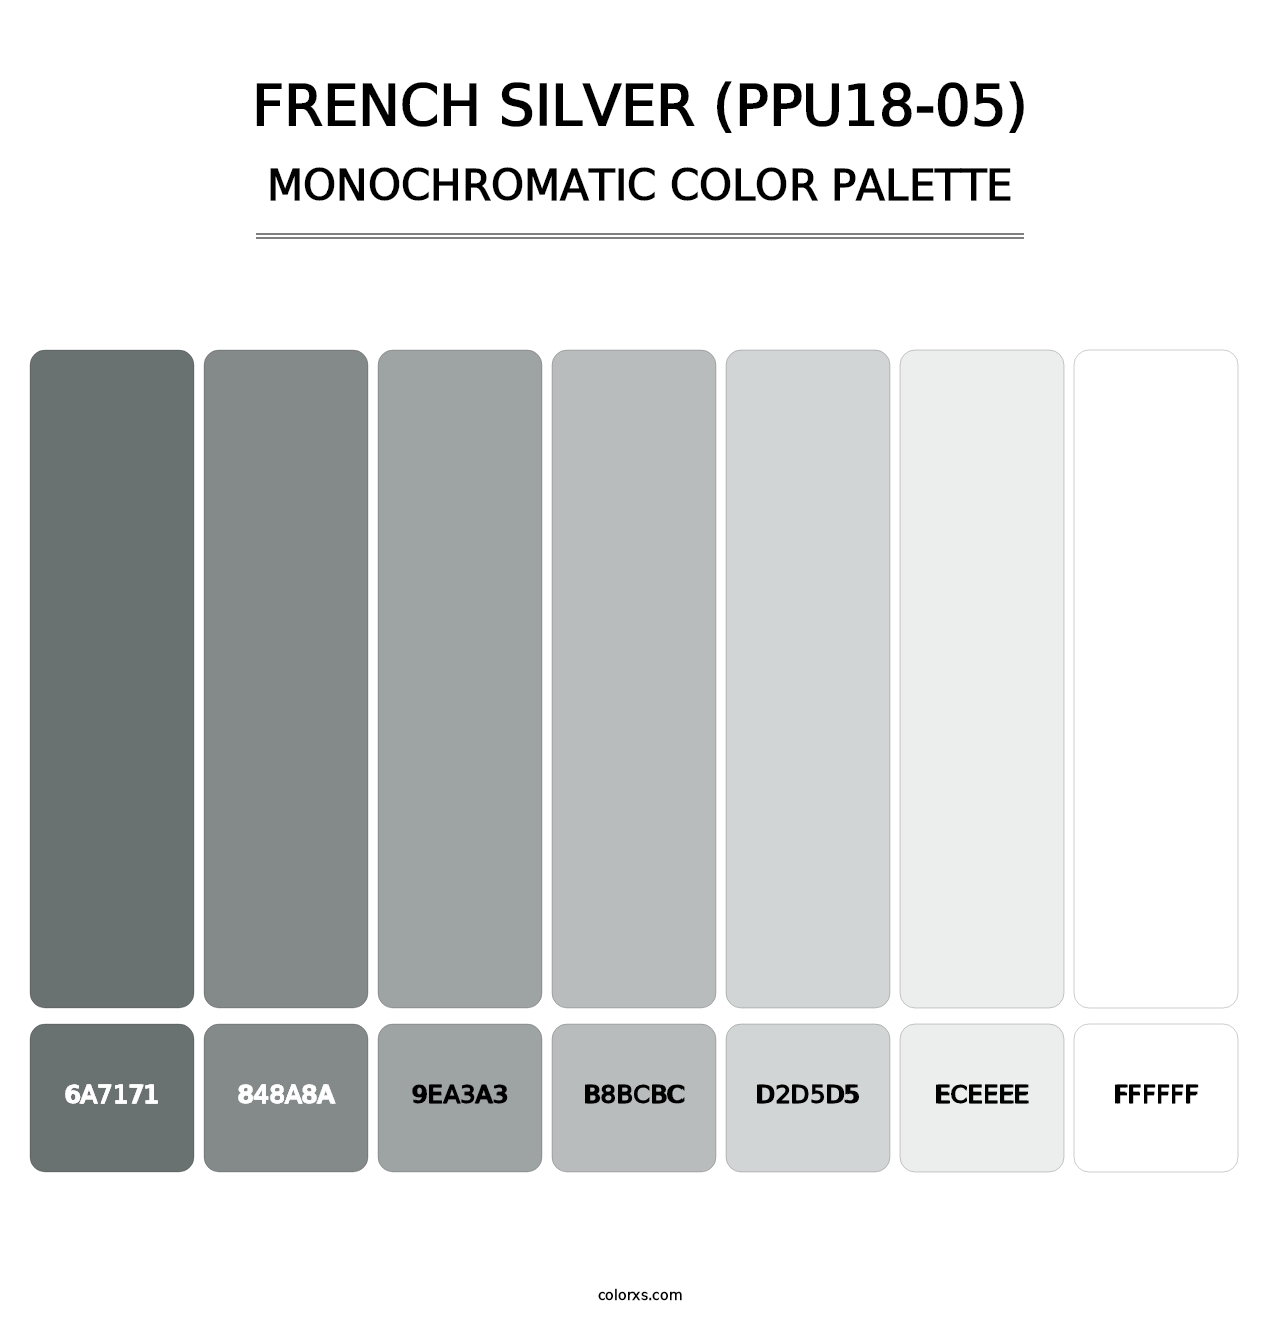 French Silver (PPU18-05) - Monochromatic Color Palette